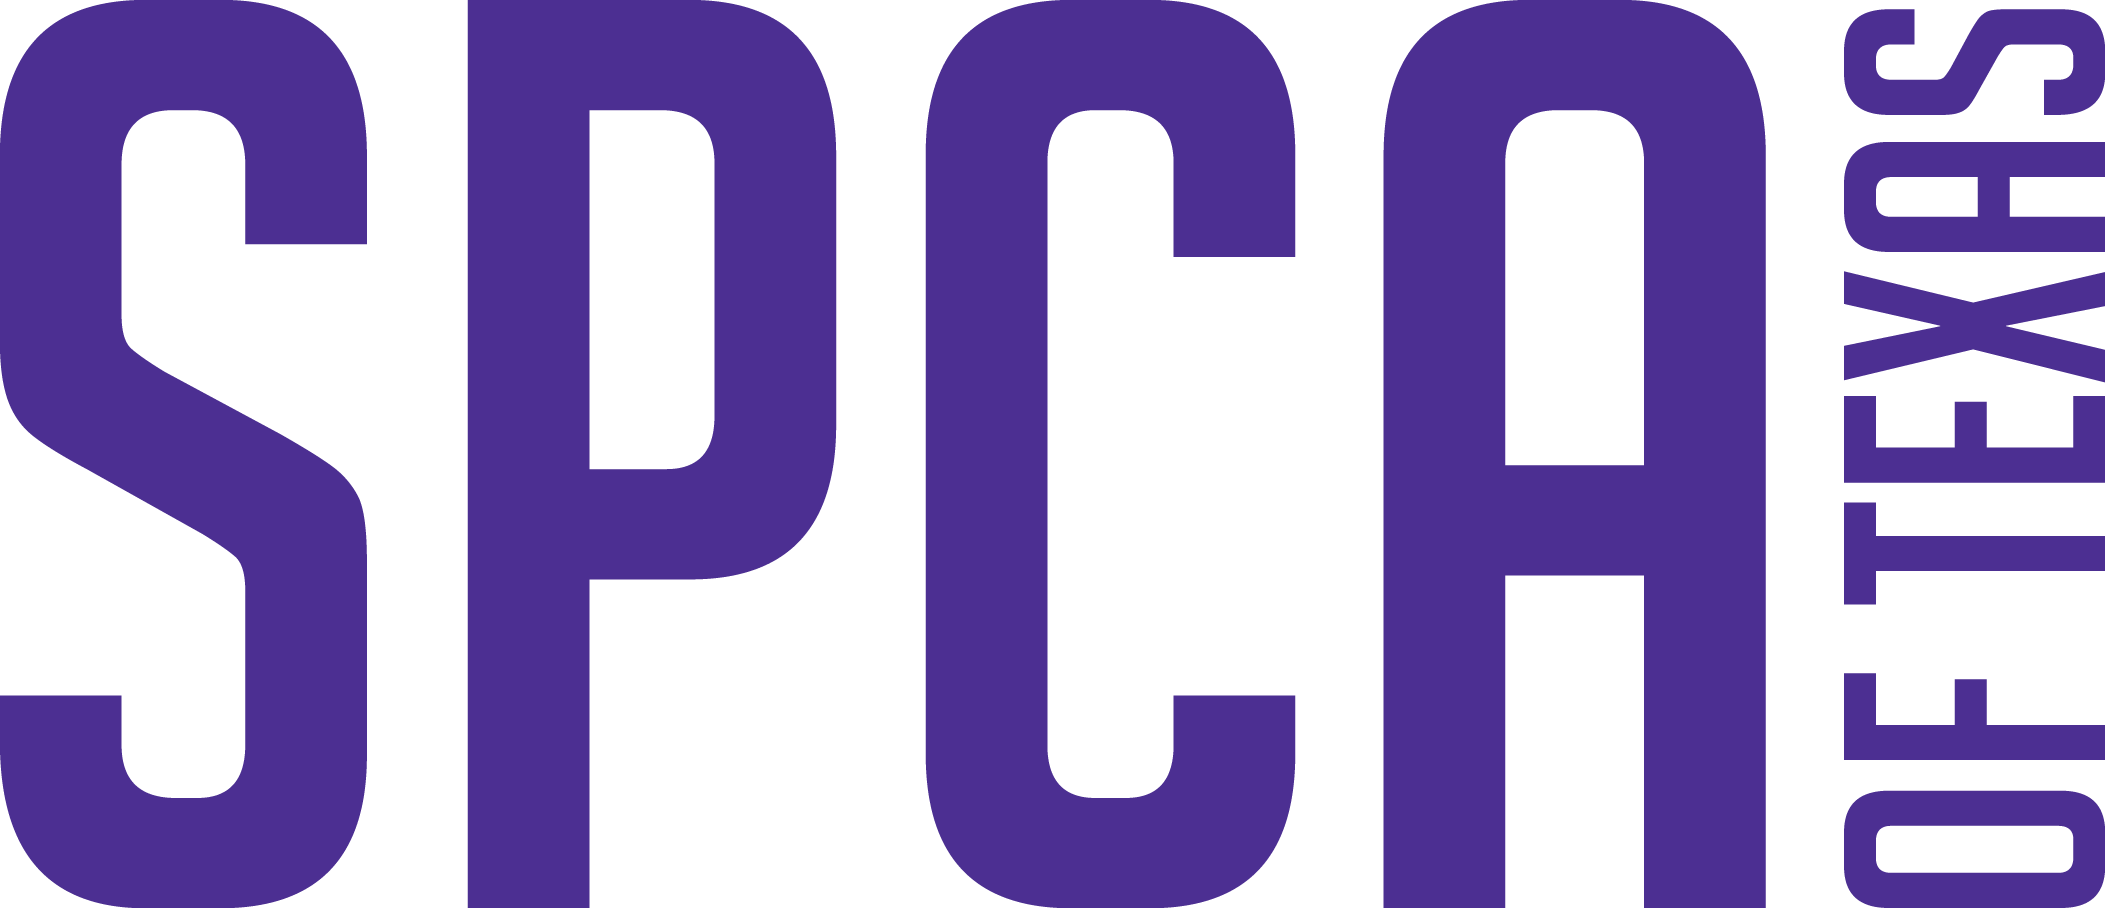 SPCA-logo_2017-purple